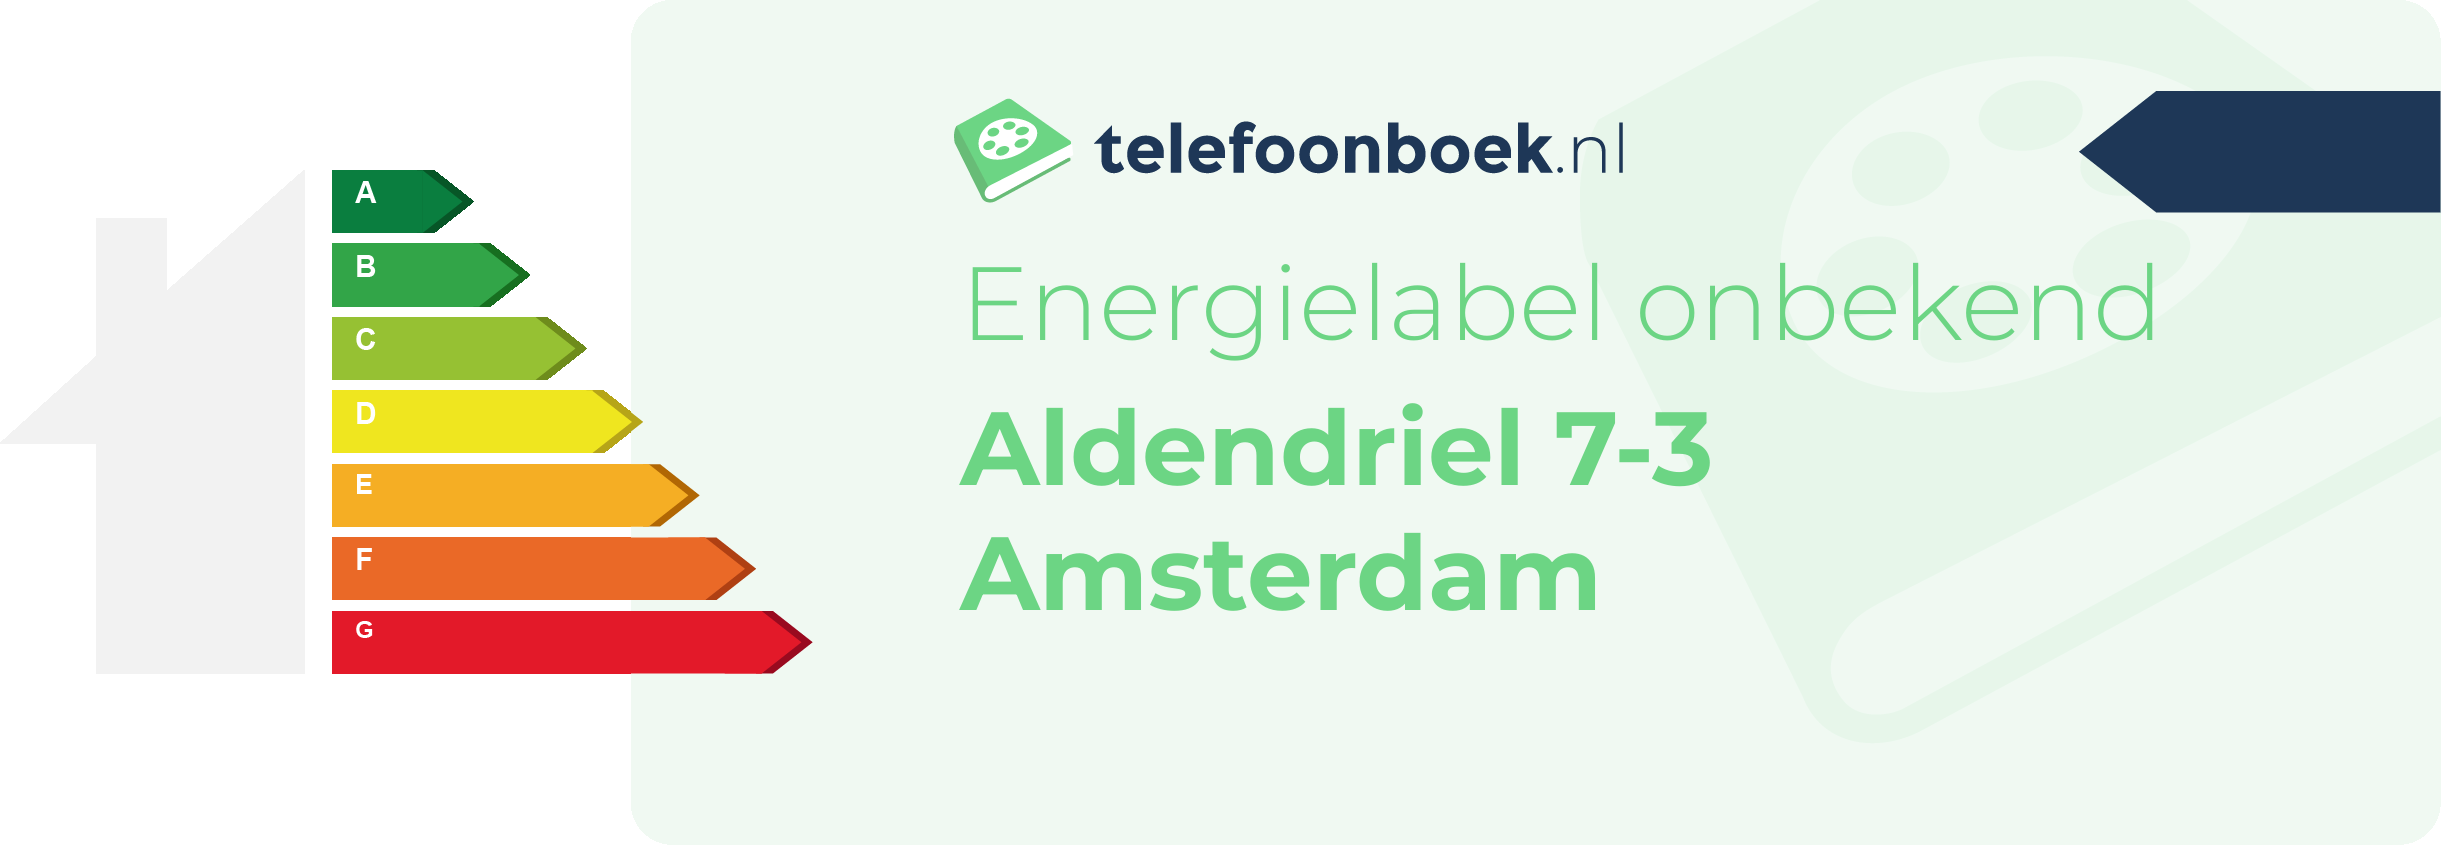 Energielabel Aldendriel 7-3 Amsterdam